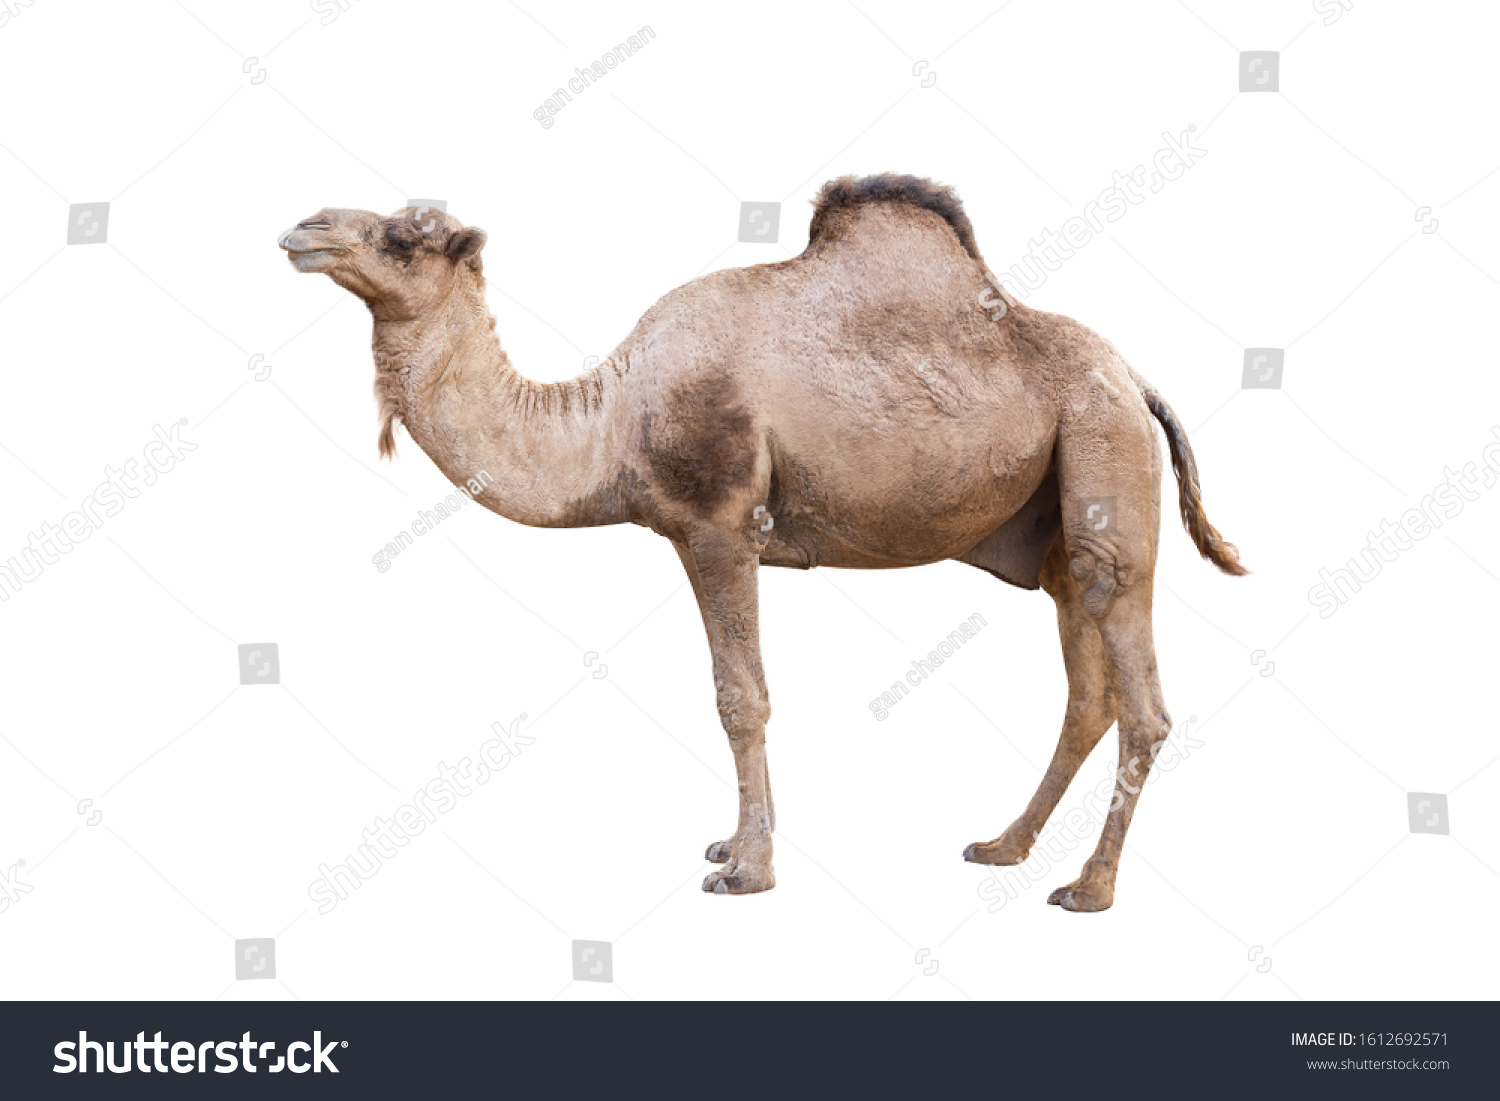 Arabian Camel, dromedary or arabian camel isolated on white background #1612692571